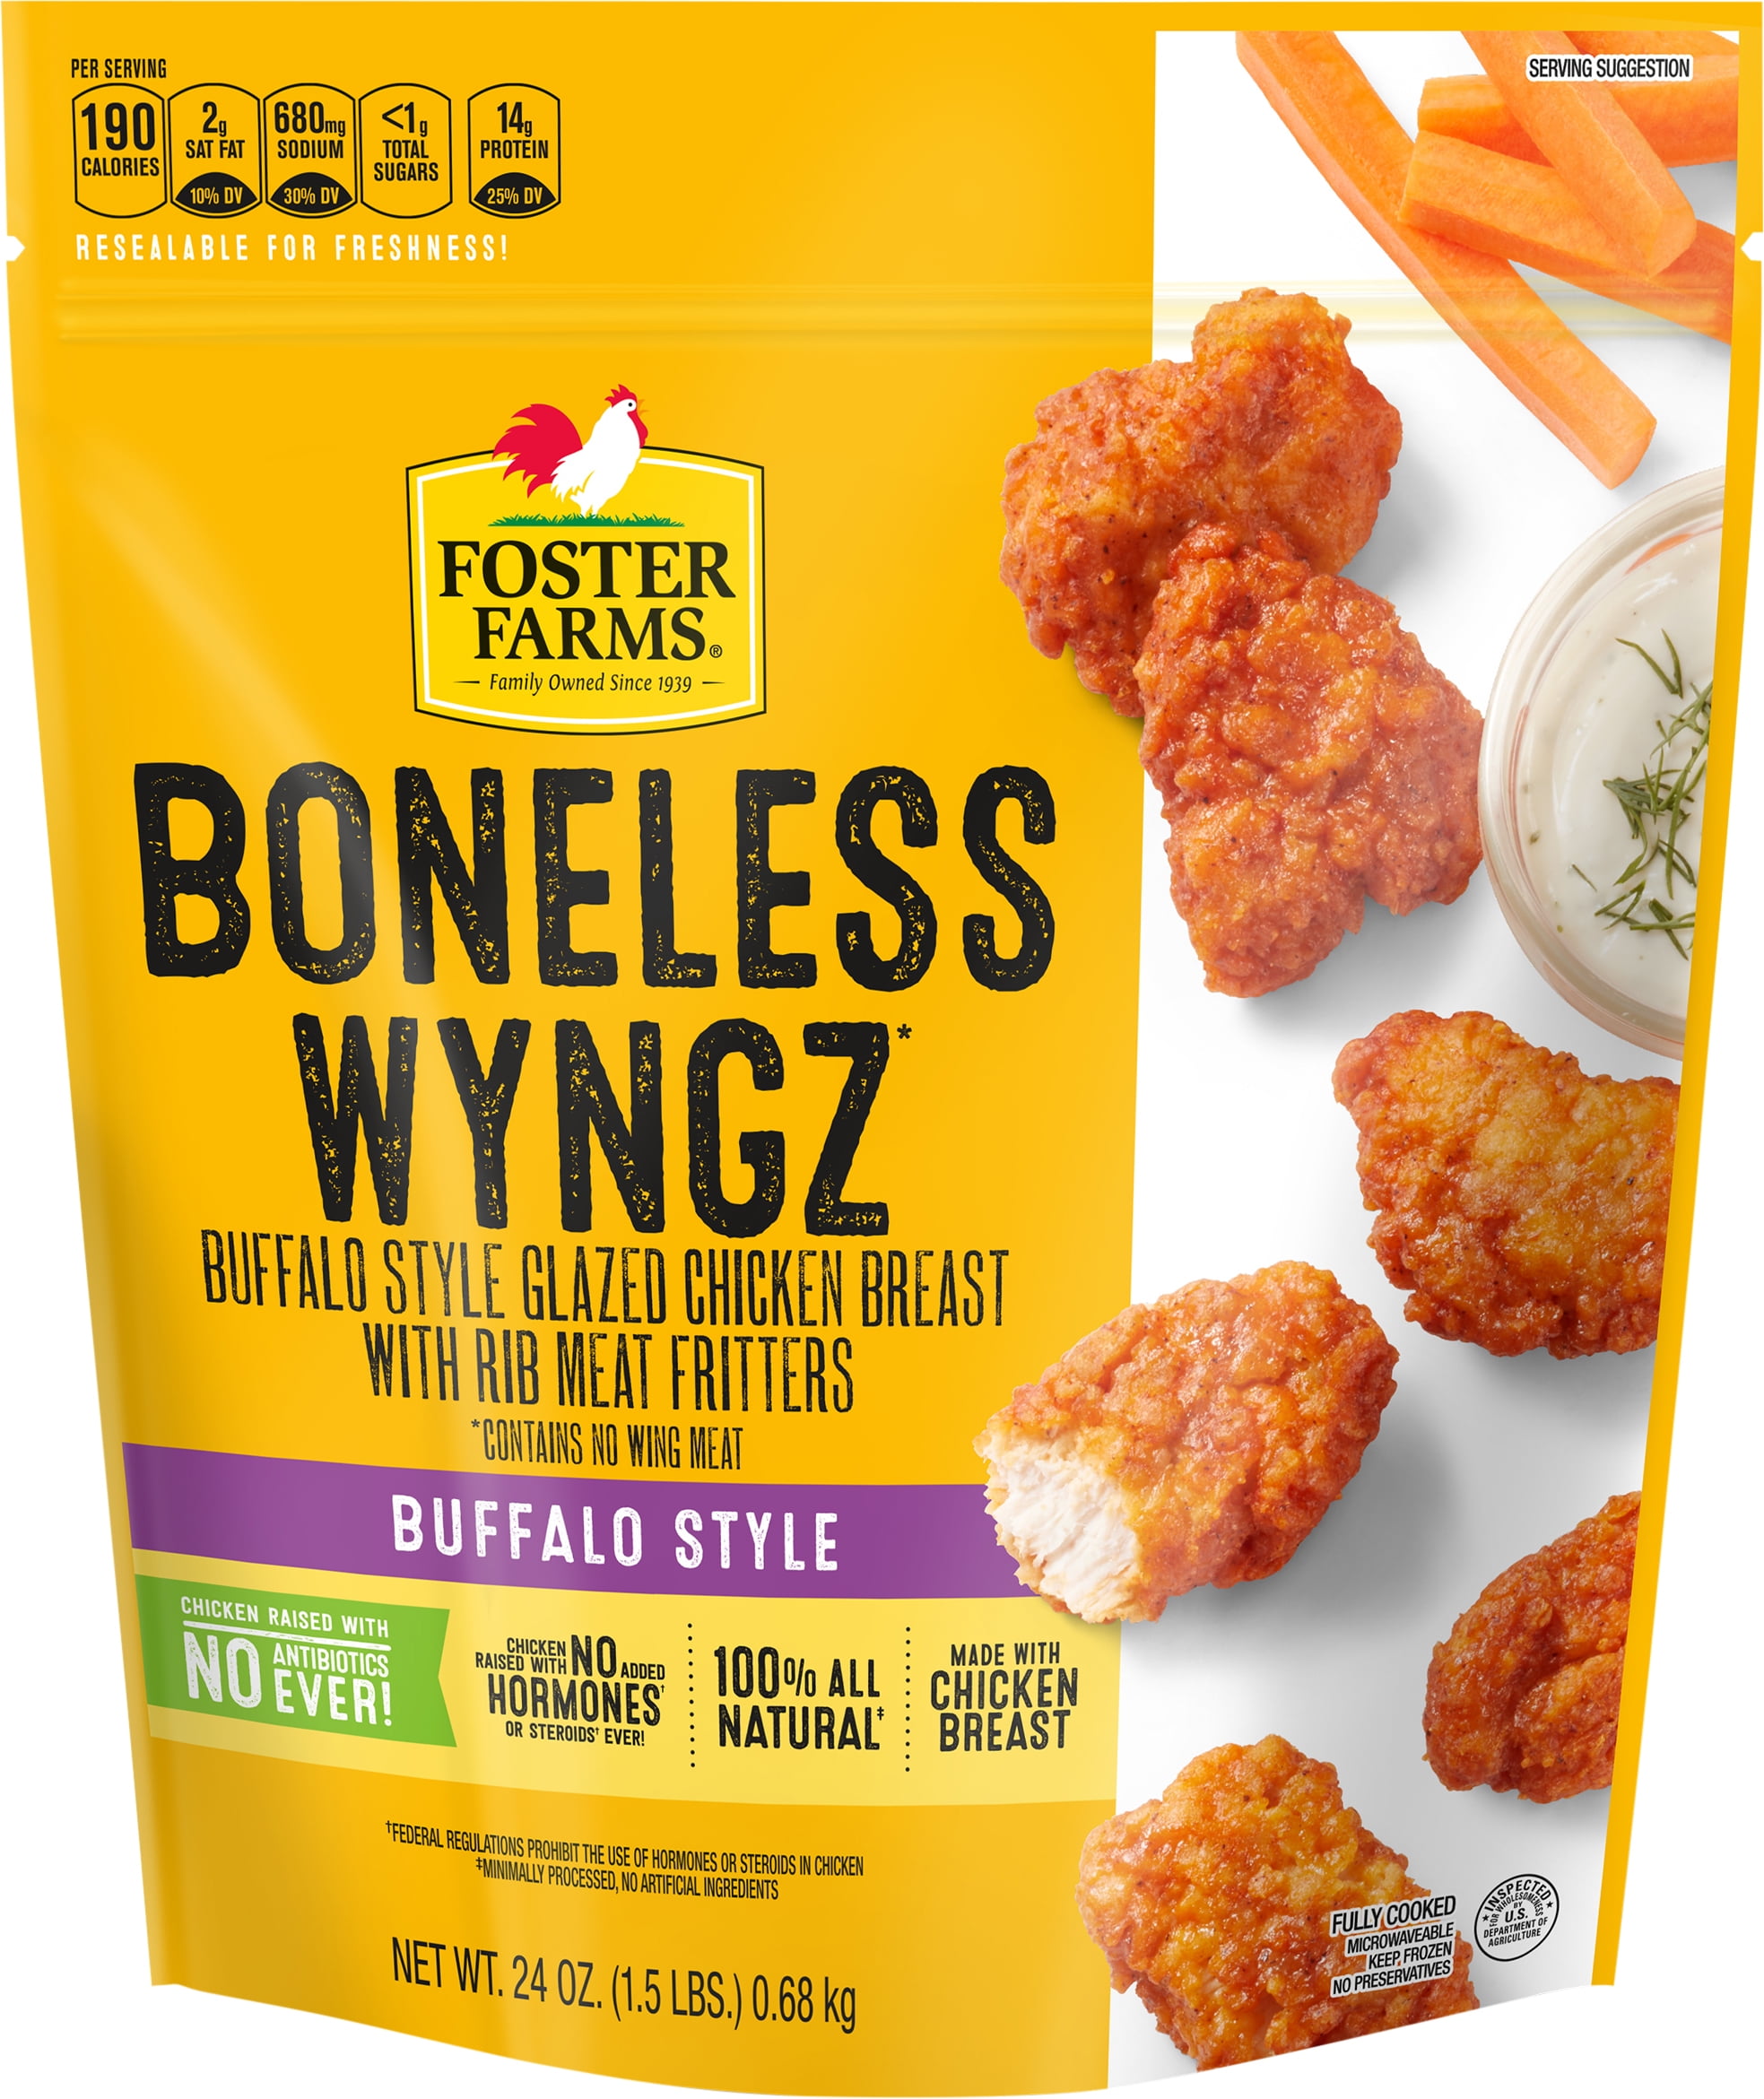 Buffalo Style Boneless Chicken Wyngz - 24 oz. - Products - Foster